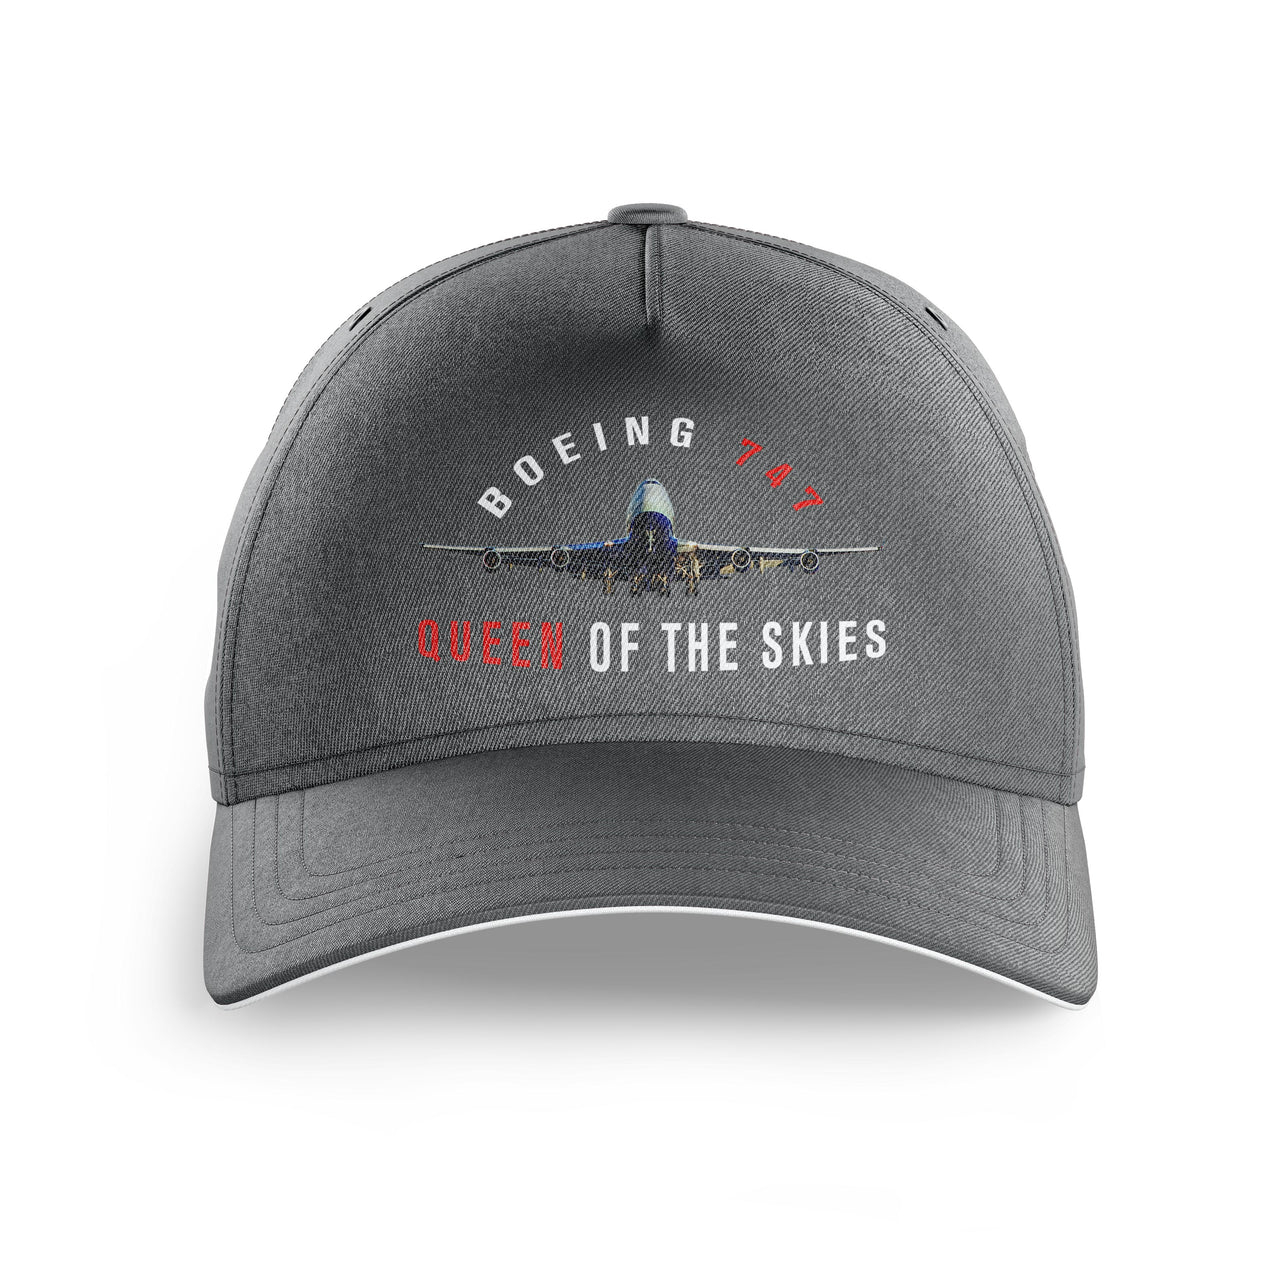 Boeing 747 Queen of the Skies Printed Hats